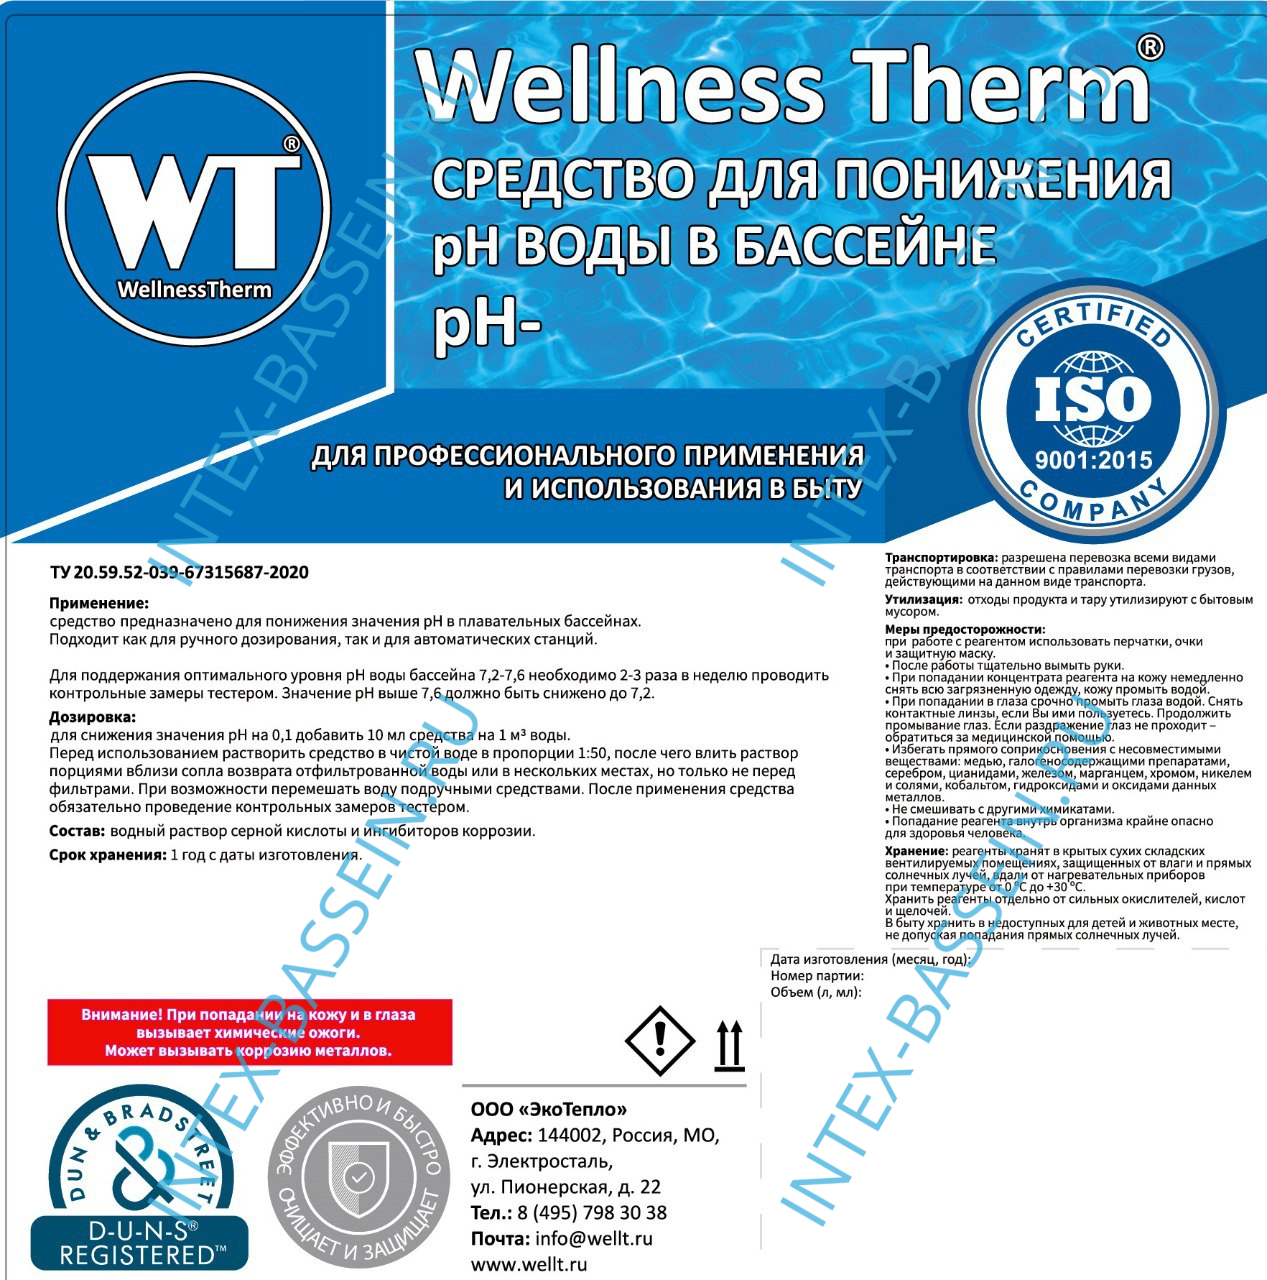 Ph- минус Wellness Therm (средство для понижения уровня Ph воды в бассейне) 30 л, арт. 877048